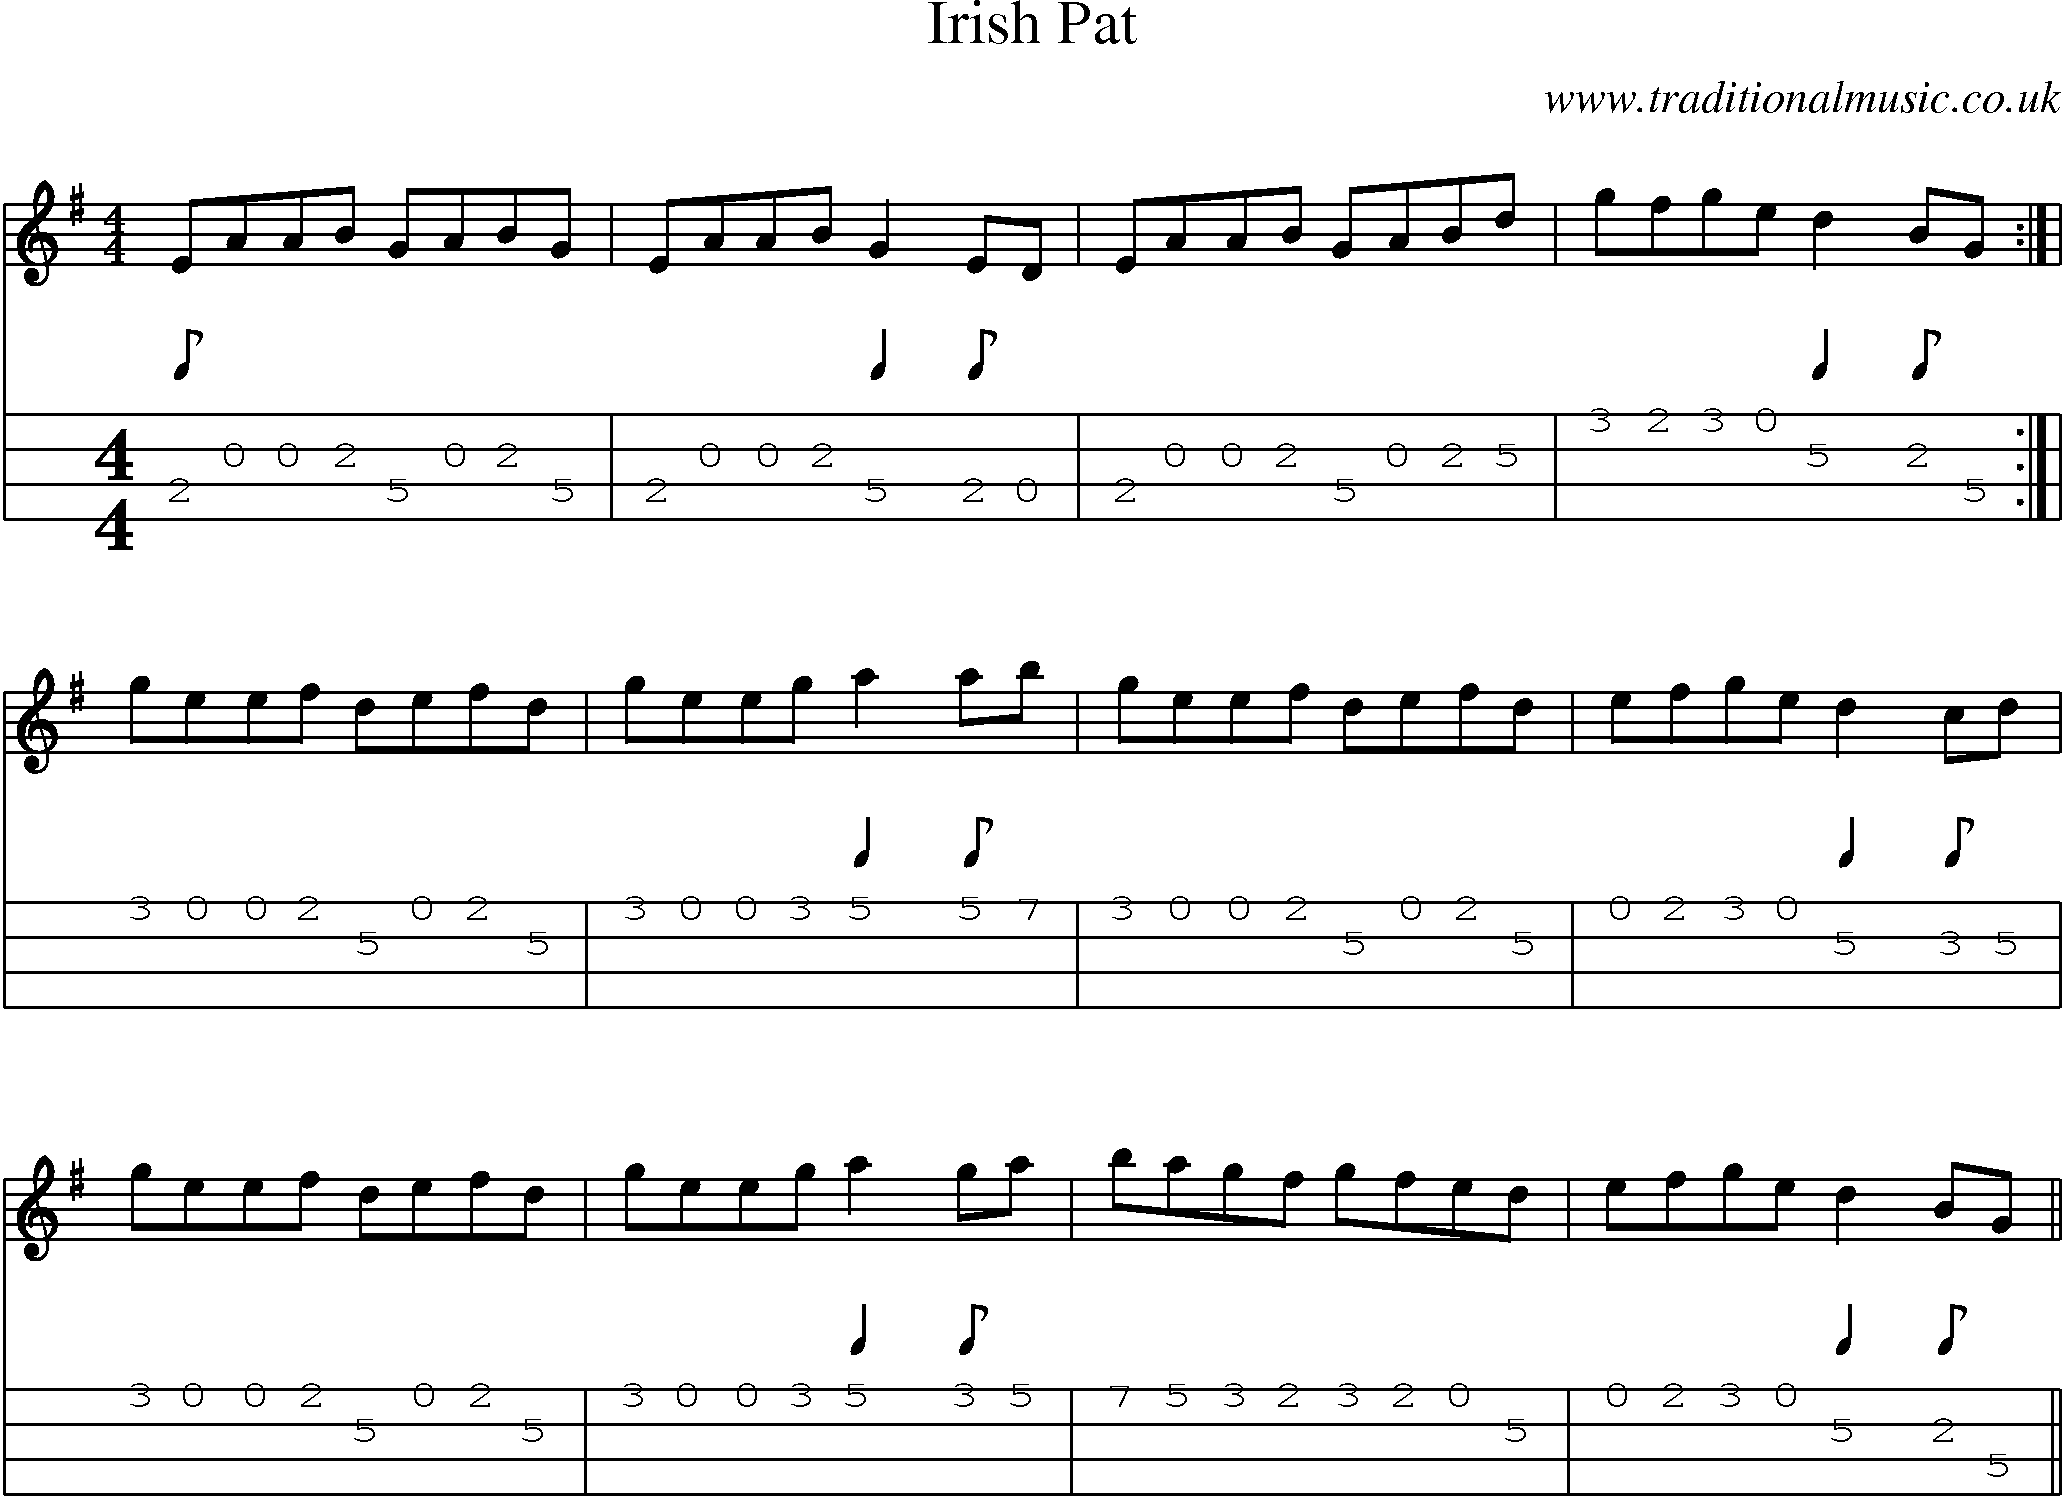 Music Score and Mandolin Tabs for Irisat